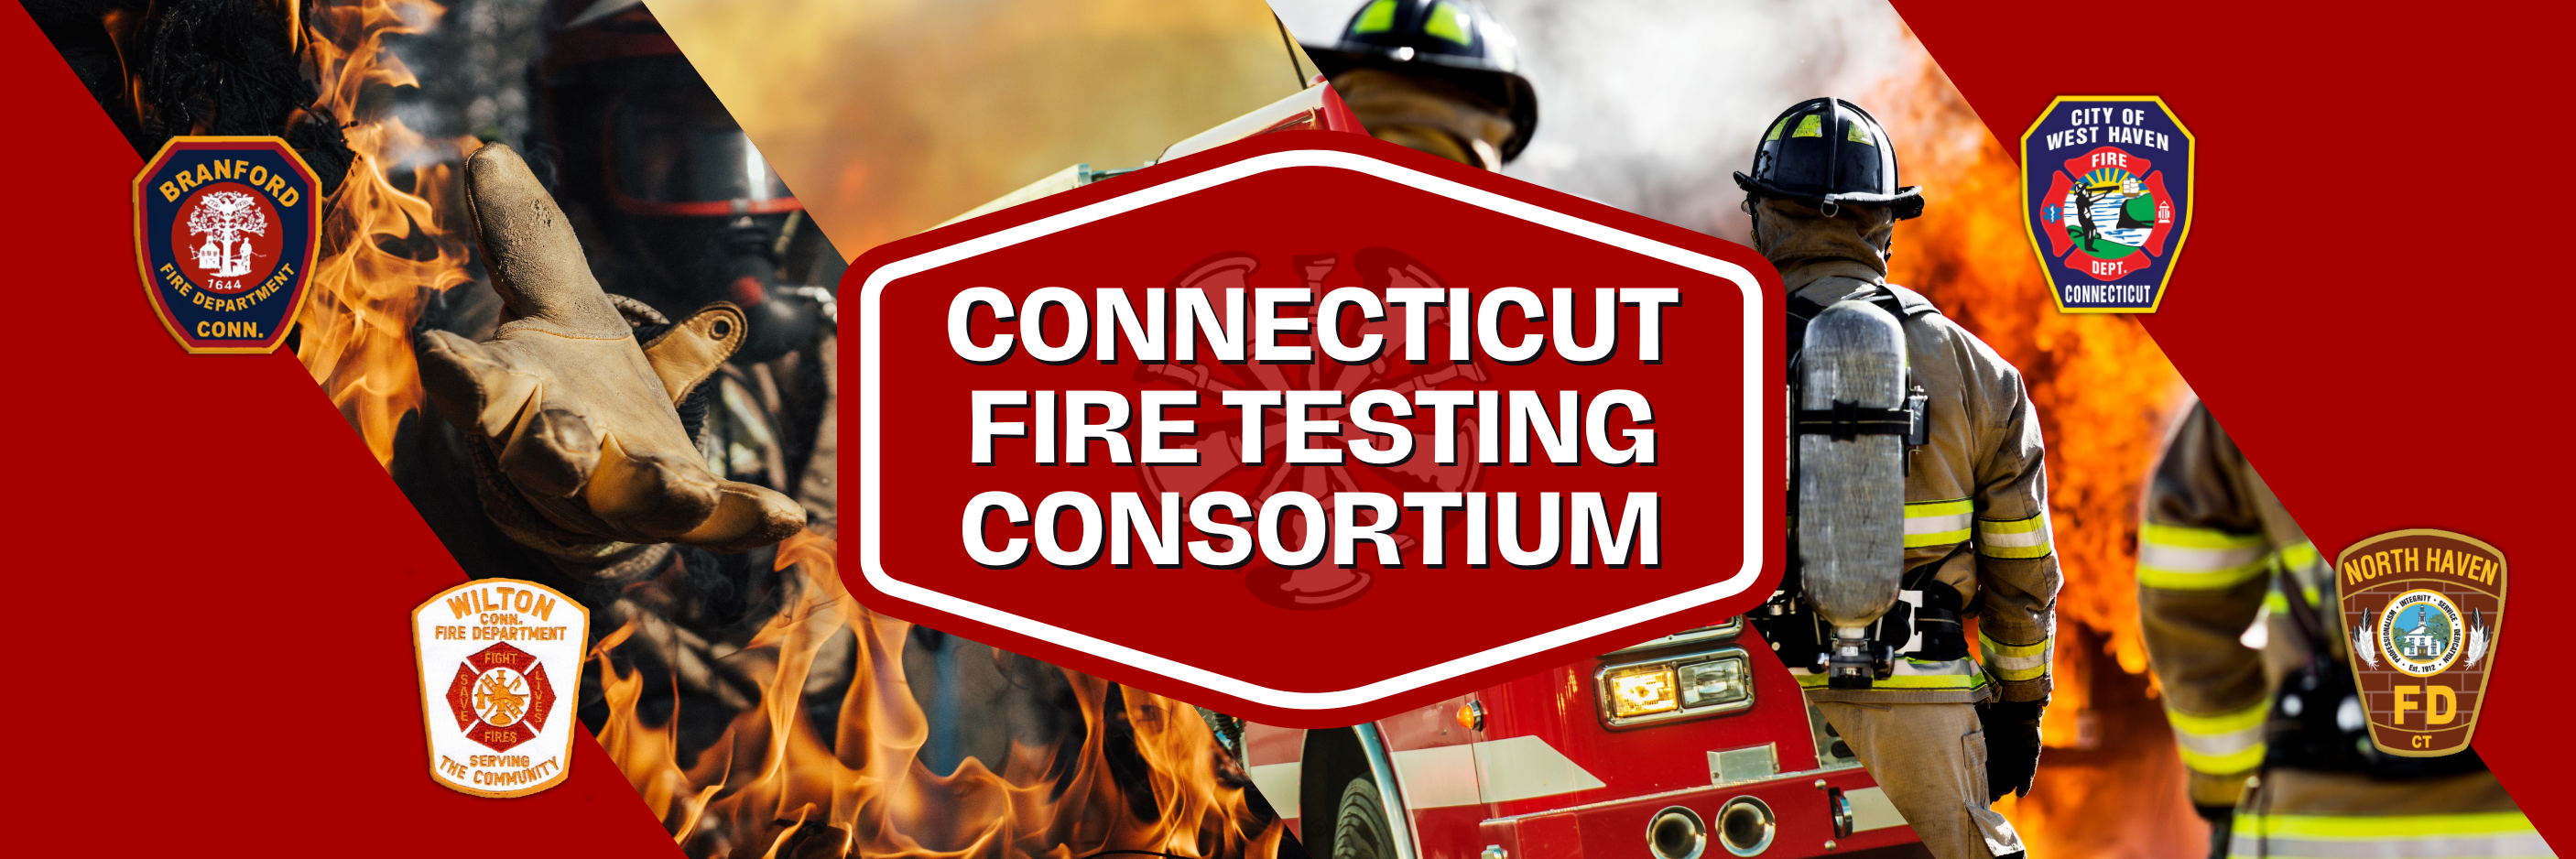 Connecticut Fire Testing Consortium, CT Public Safety Jobs